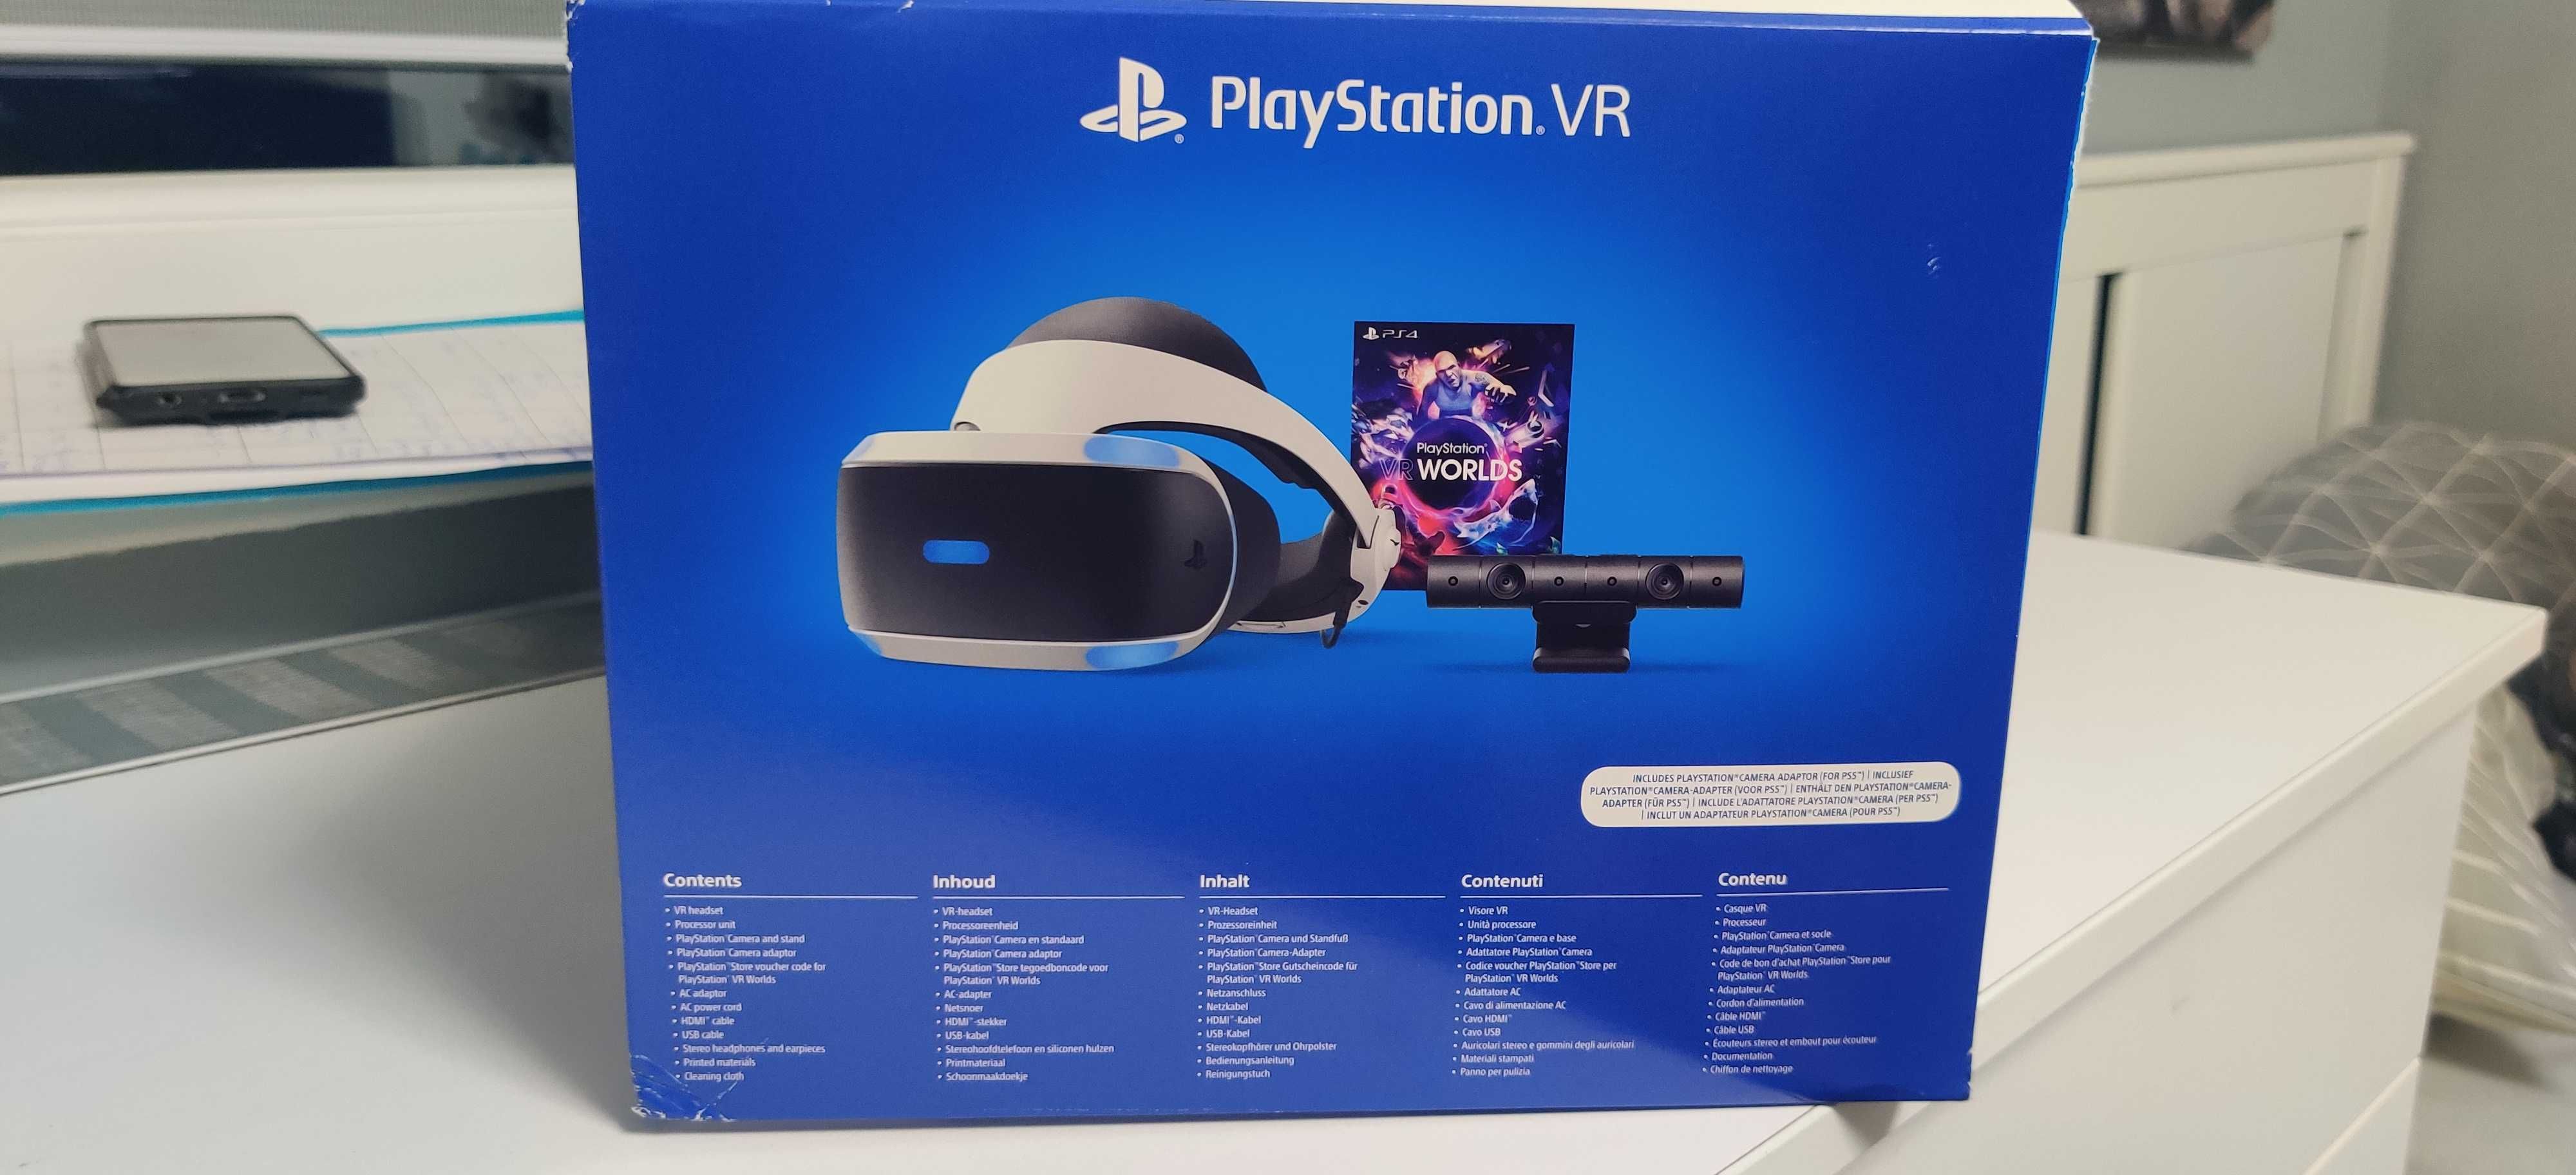 PlayStation VR worlds cuh-zvr2 + un joc gratis